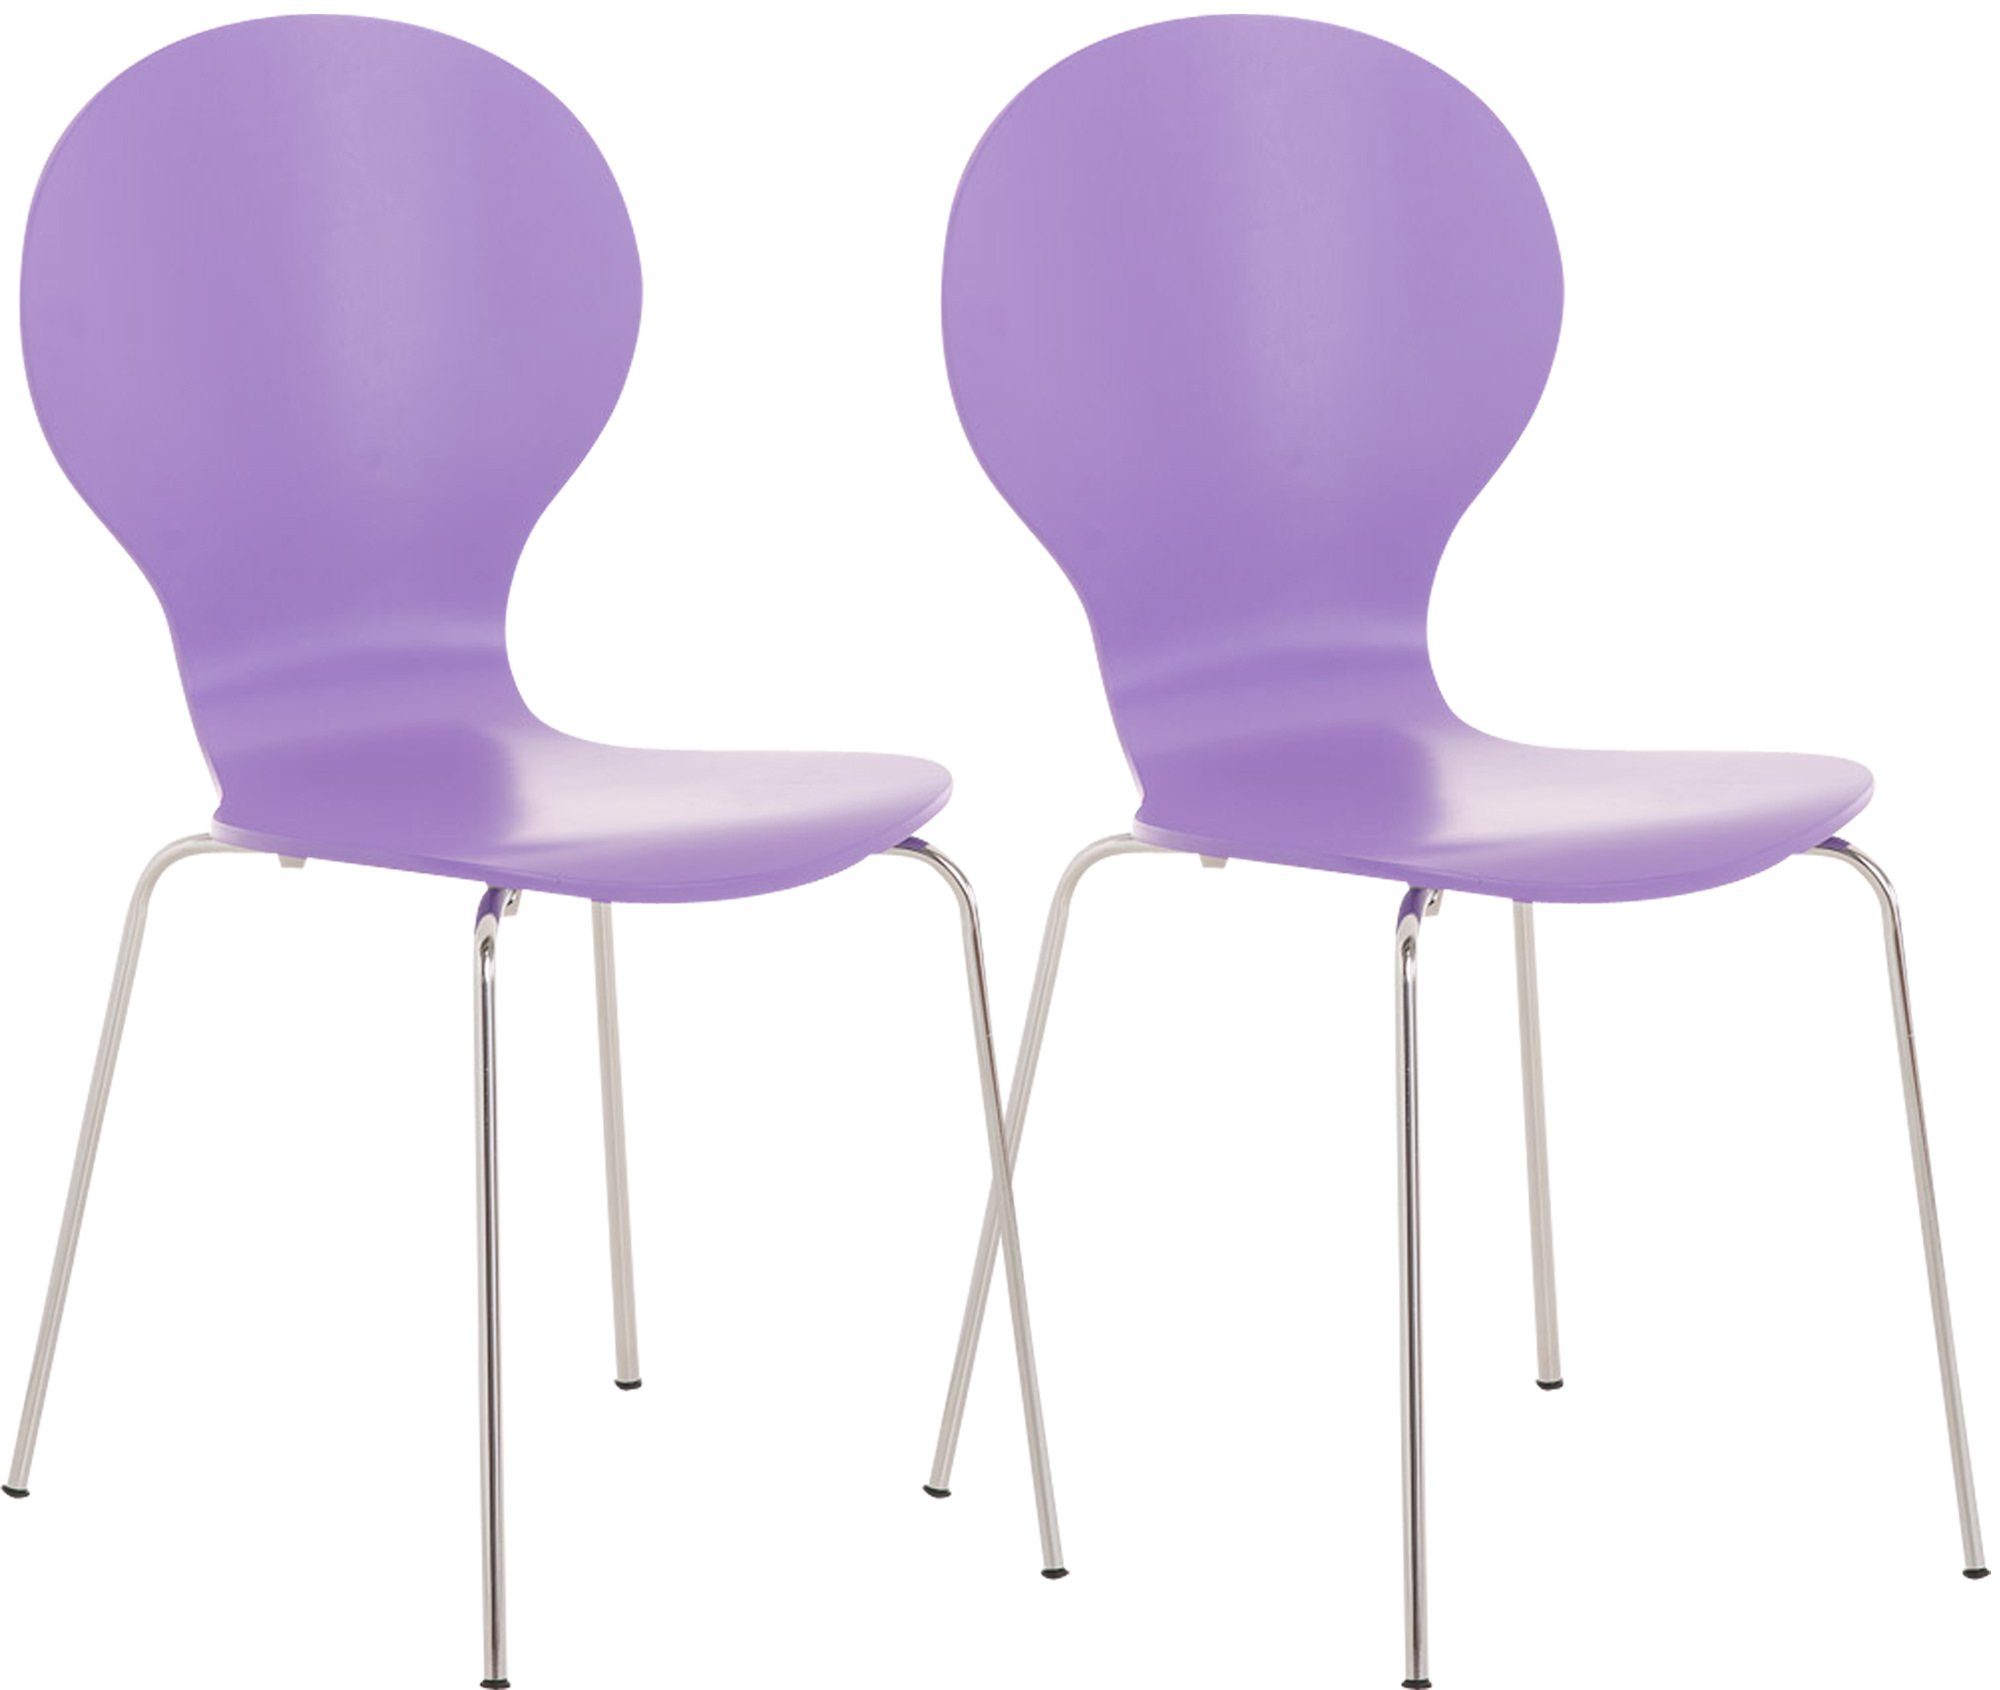 Sitzfläche: Daggy - TPFLiving Holz - lila 2 (Besprechungsstuhl Besucherstuhl Konferenzstuhl mit geformter - Gestell: Sitzfläche St), Metall Warteraumstuhl chrom ergonomisch Messestuhl, -